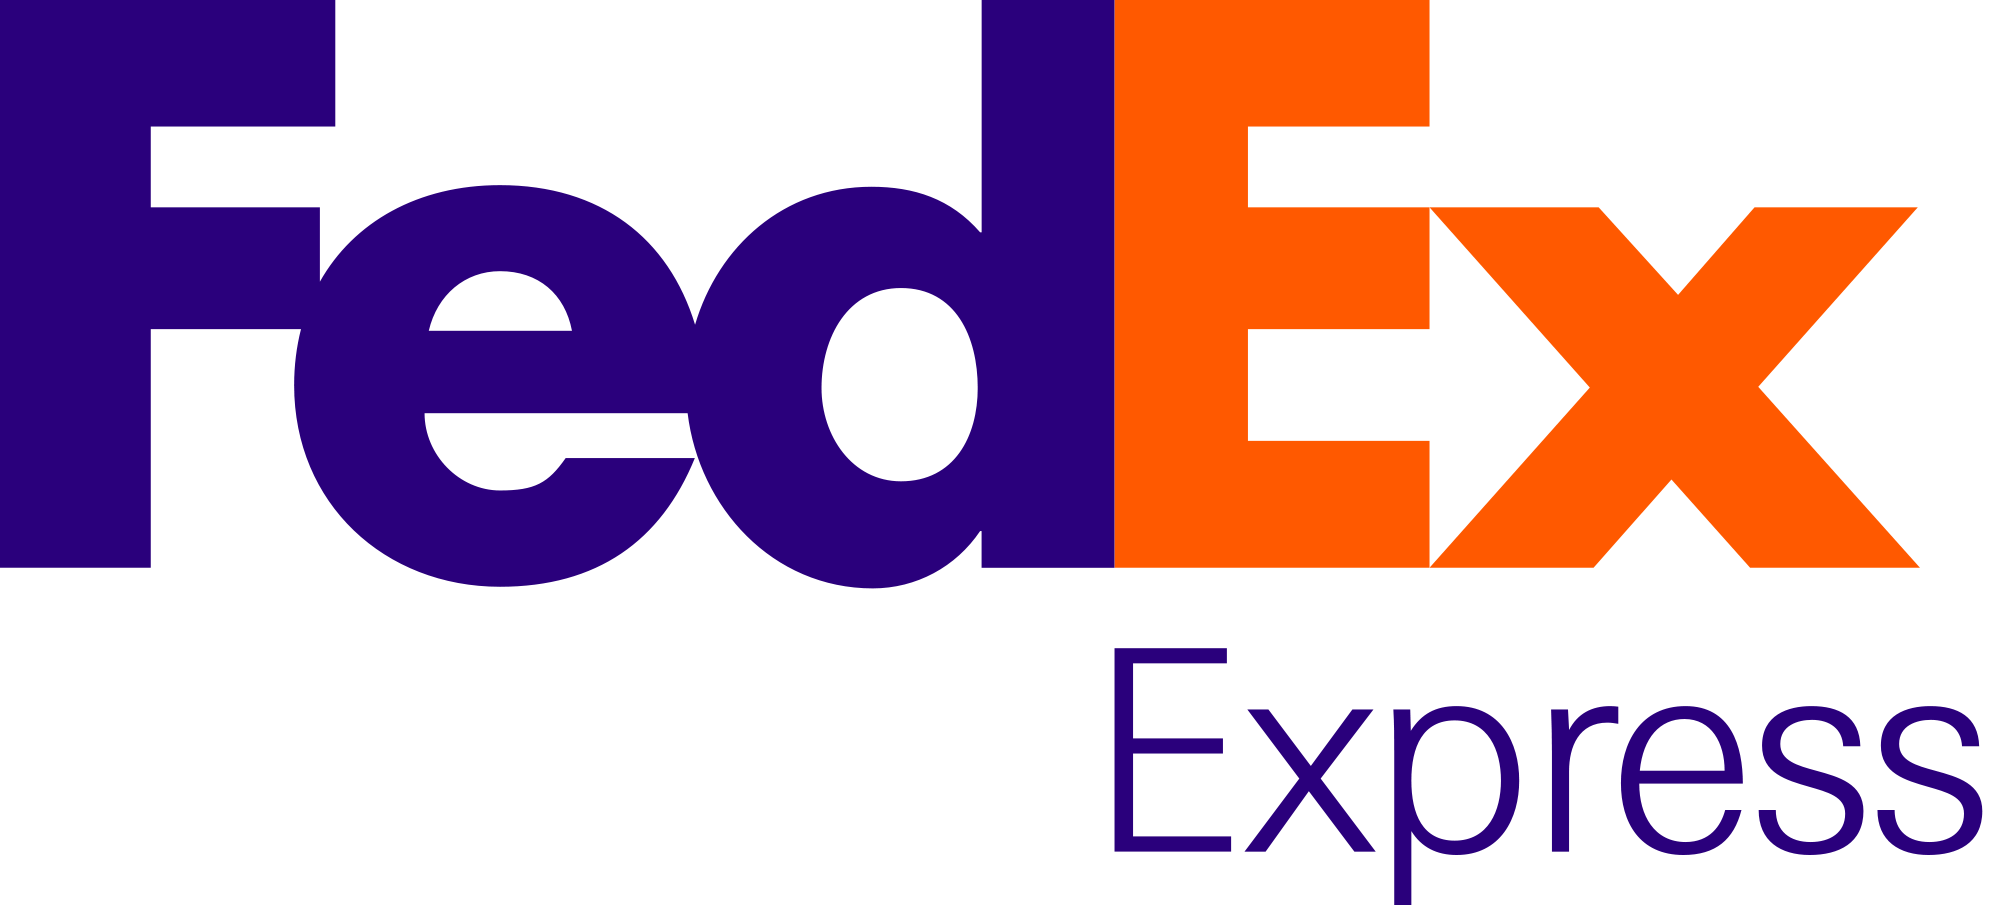 Télephone information entreprise  Fedex Express